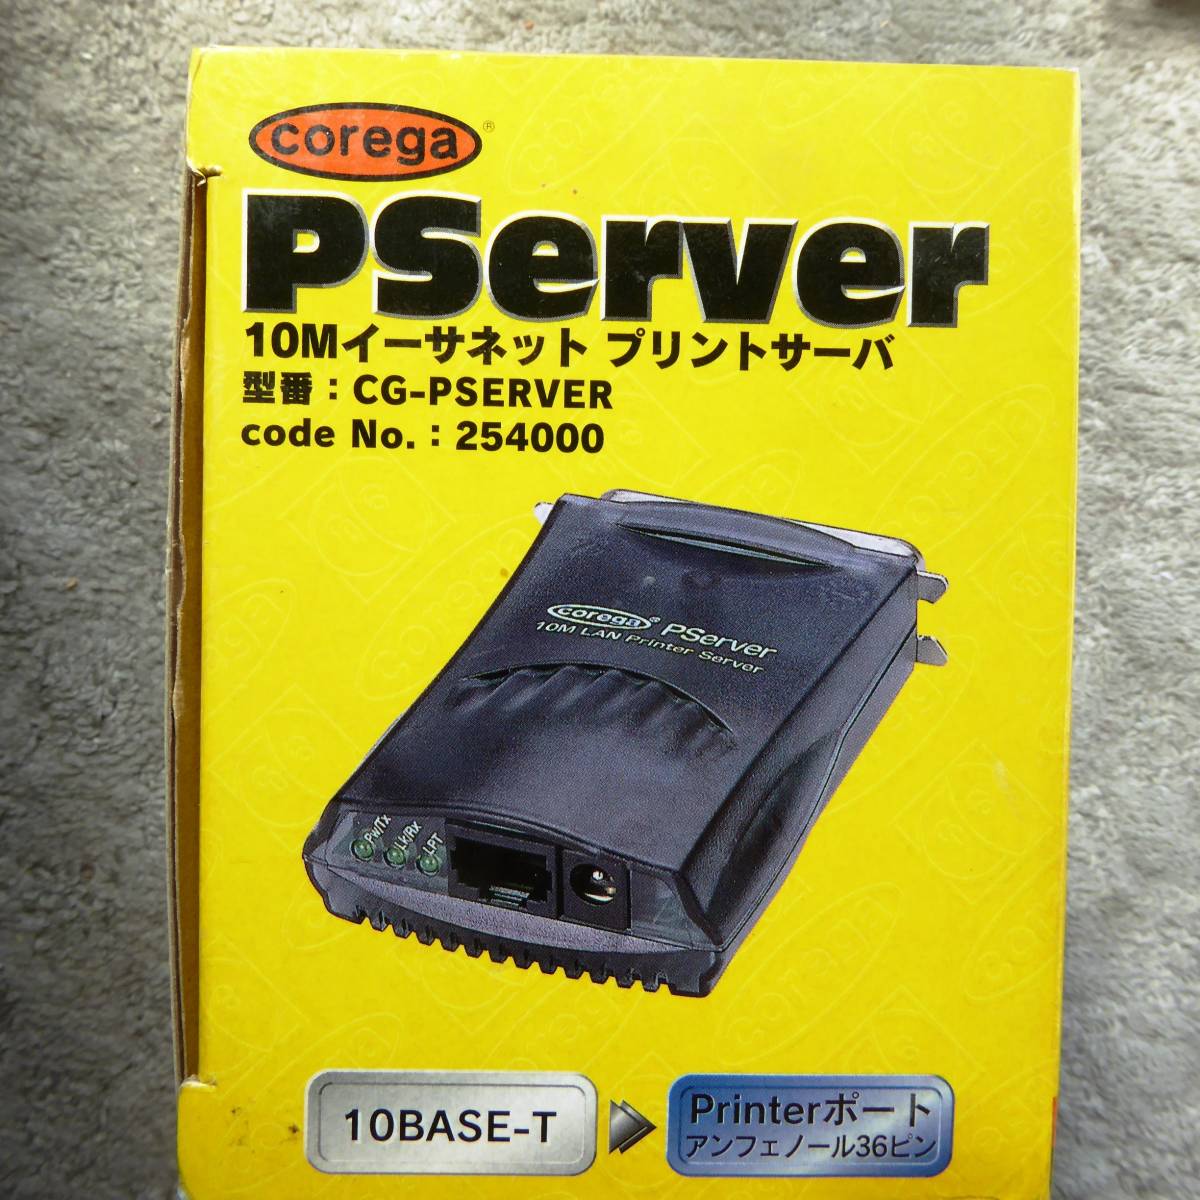 corega Pserver パラレル プリントサーバー 元箱付 ジャンク_画像7